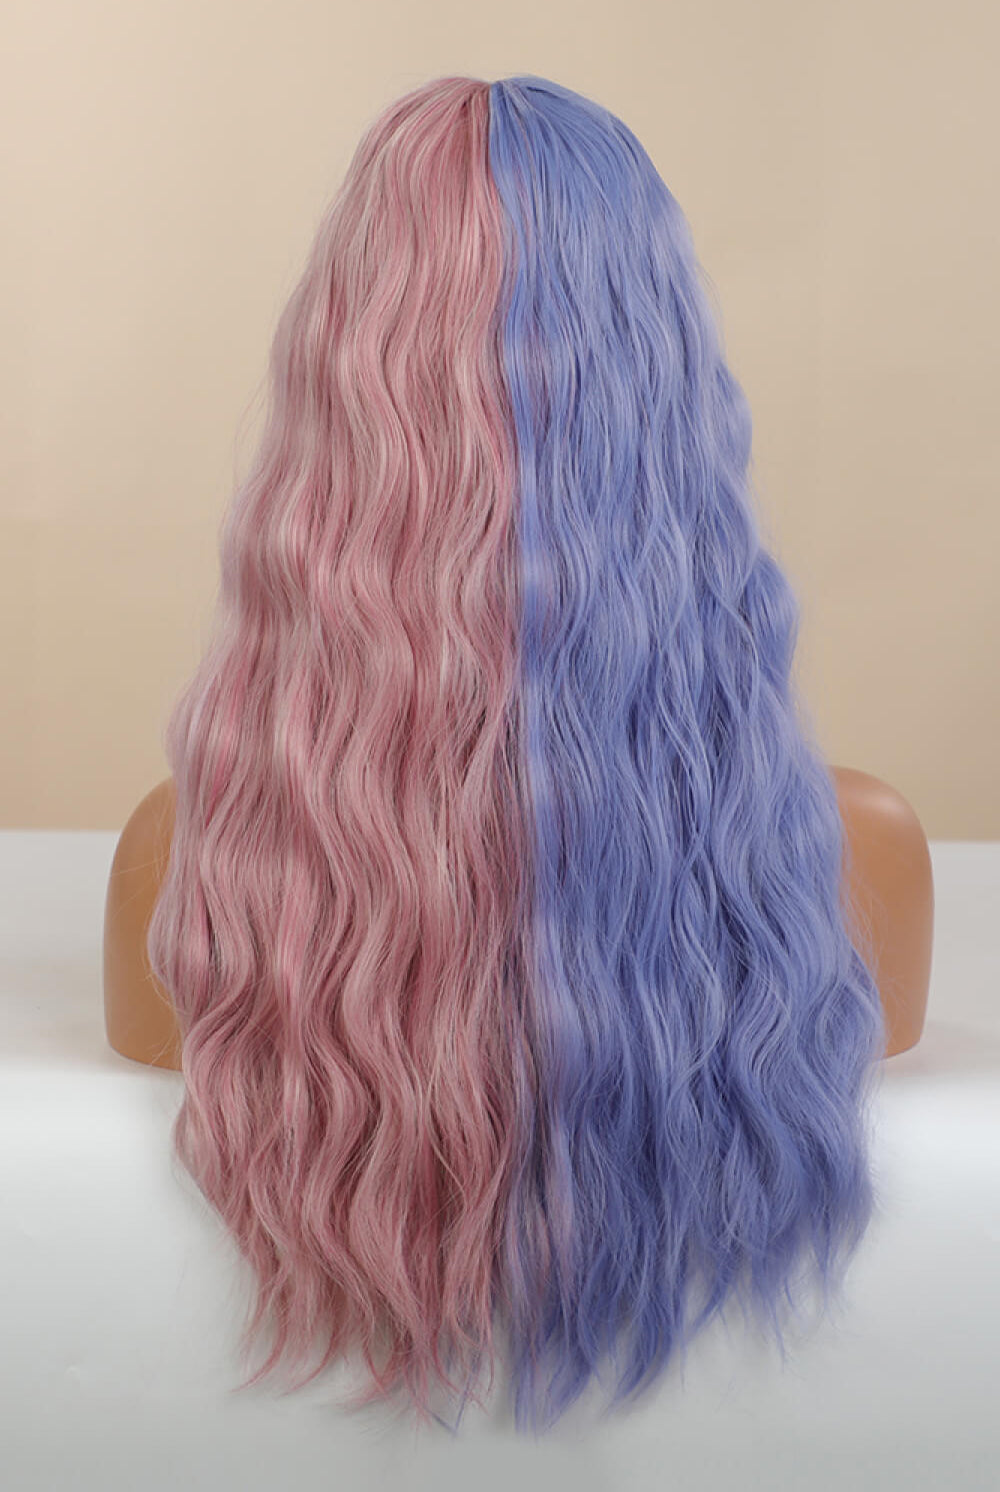 13*1" Full-Machine Wigs Synthetic Long Wave 26" in Blue/Pink Split Dye - GemThreads Boutique